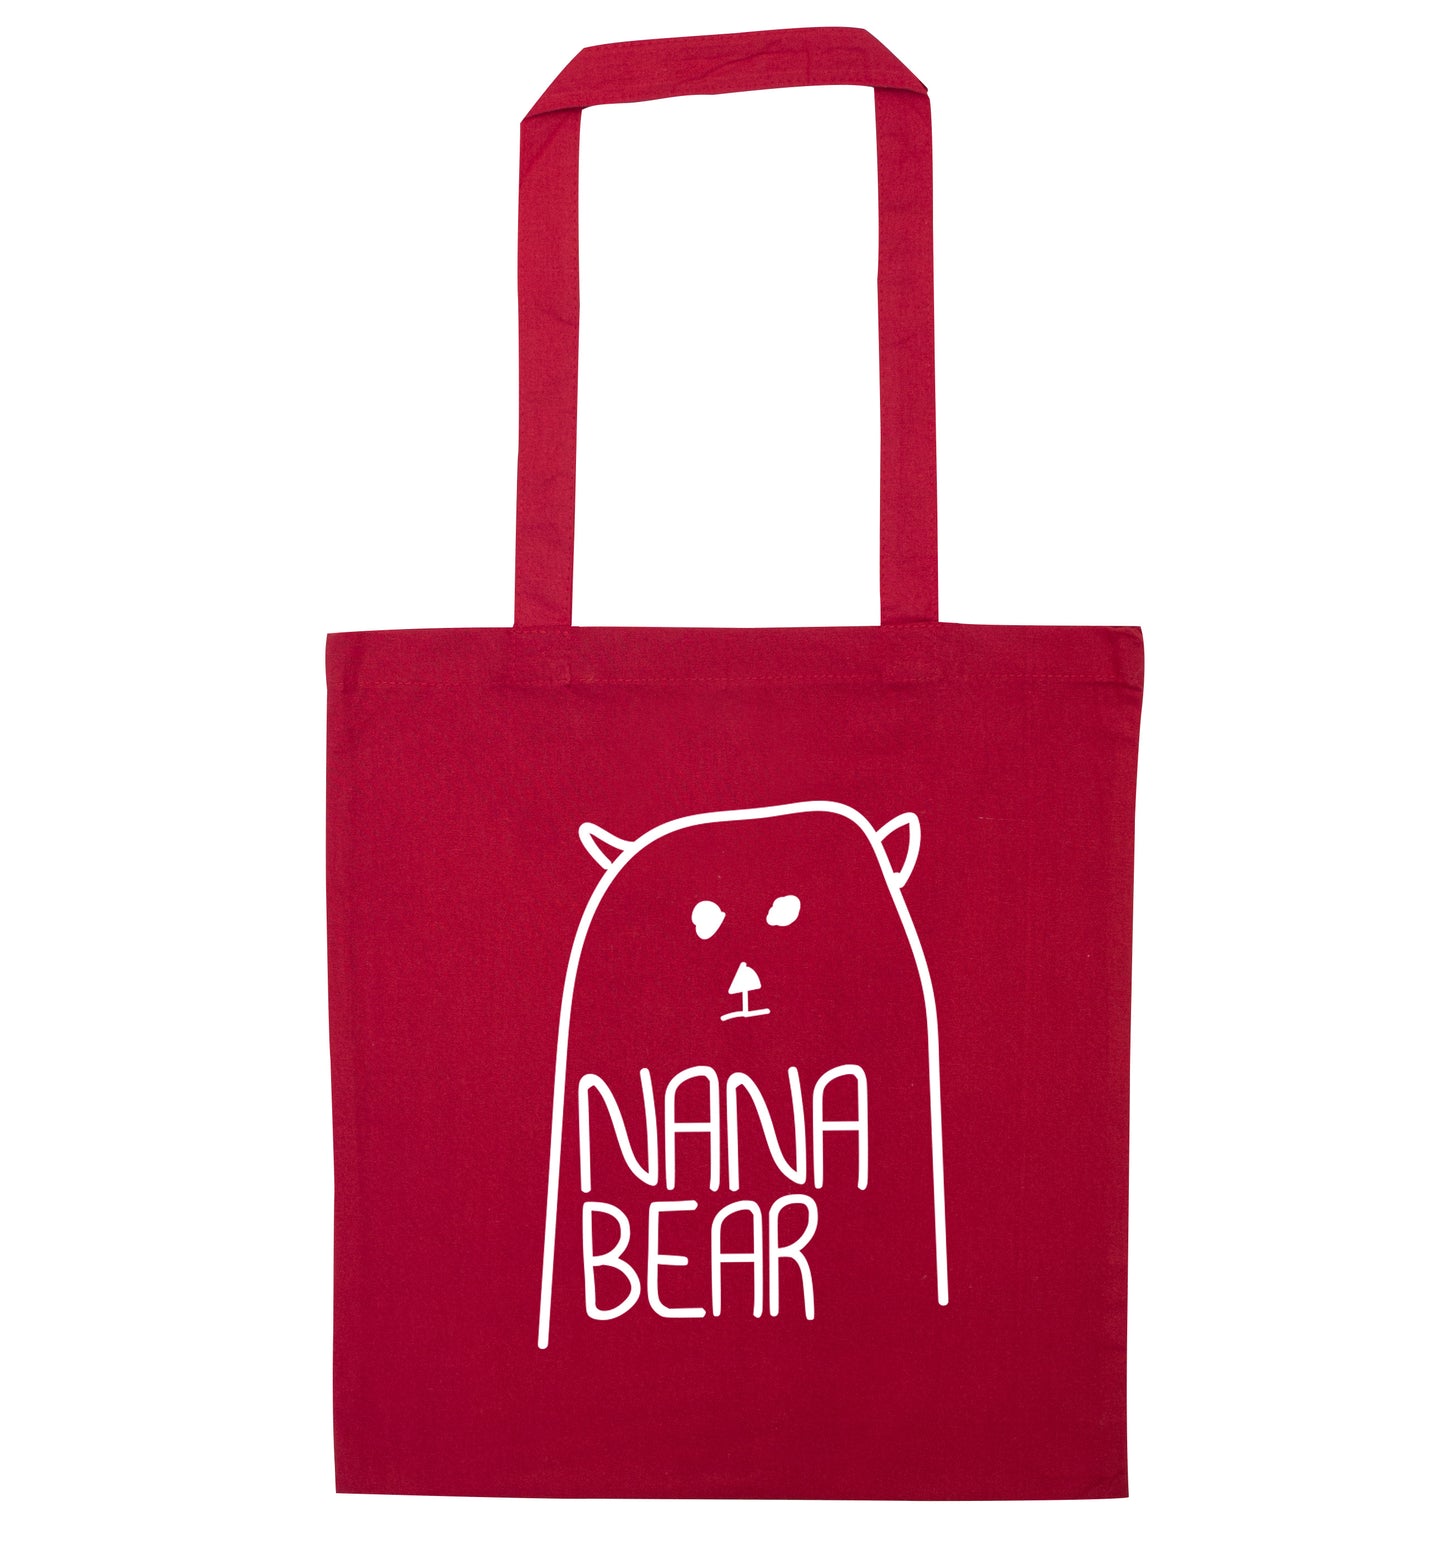 Nana bear red tote bag